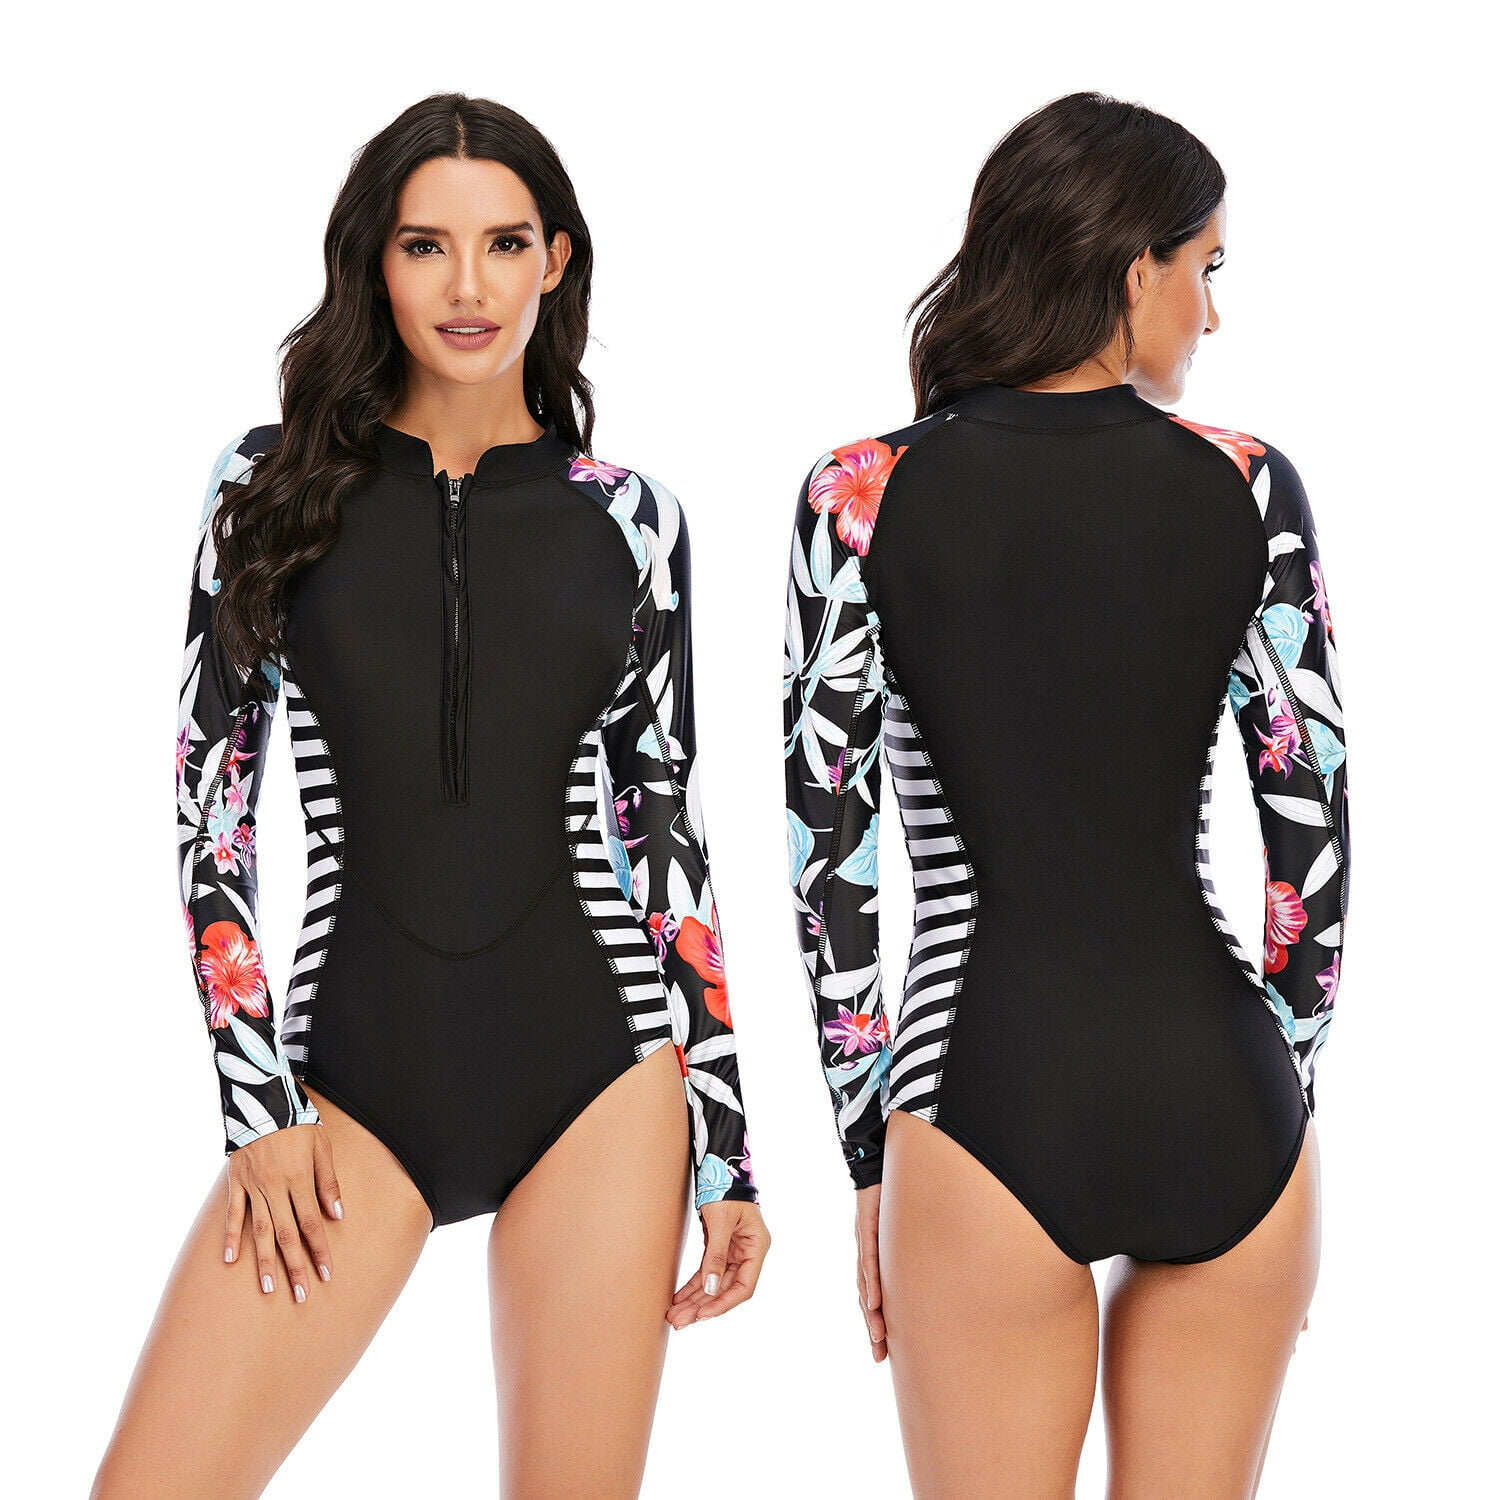 Women Long Sleeve Rashguard One Piece Swimsuit UV Protection Block Surfing Swimwear Bathing Suit CapsA 